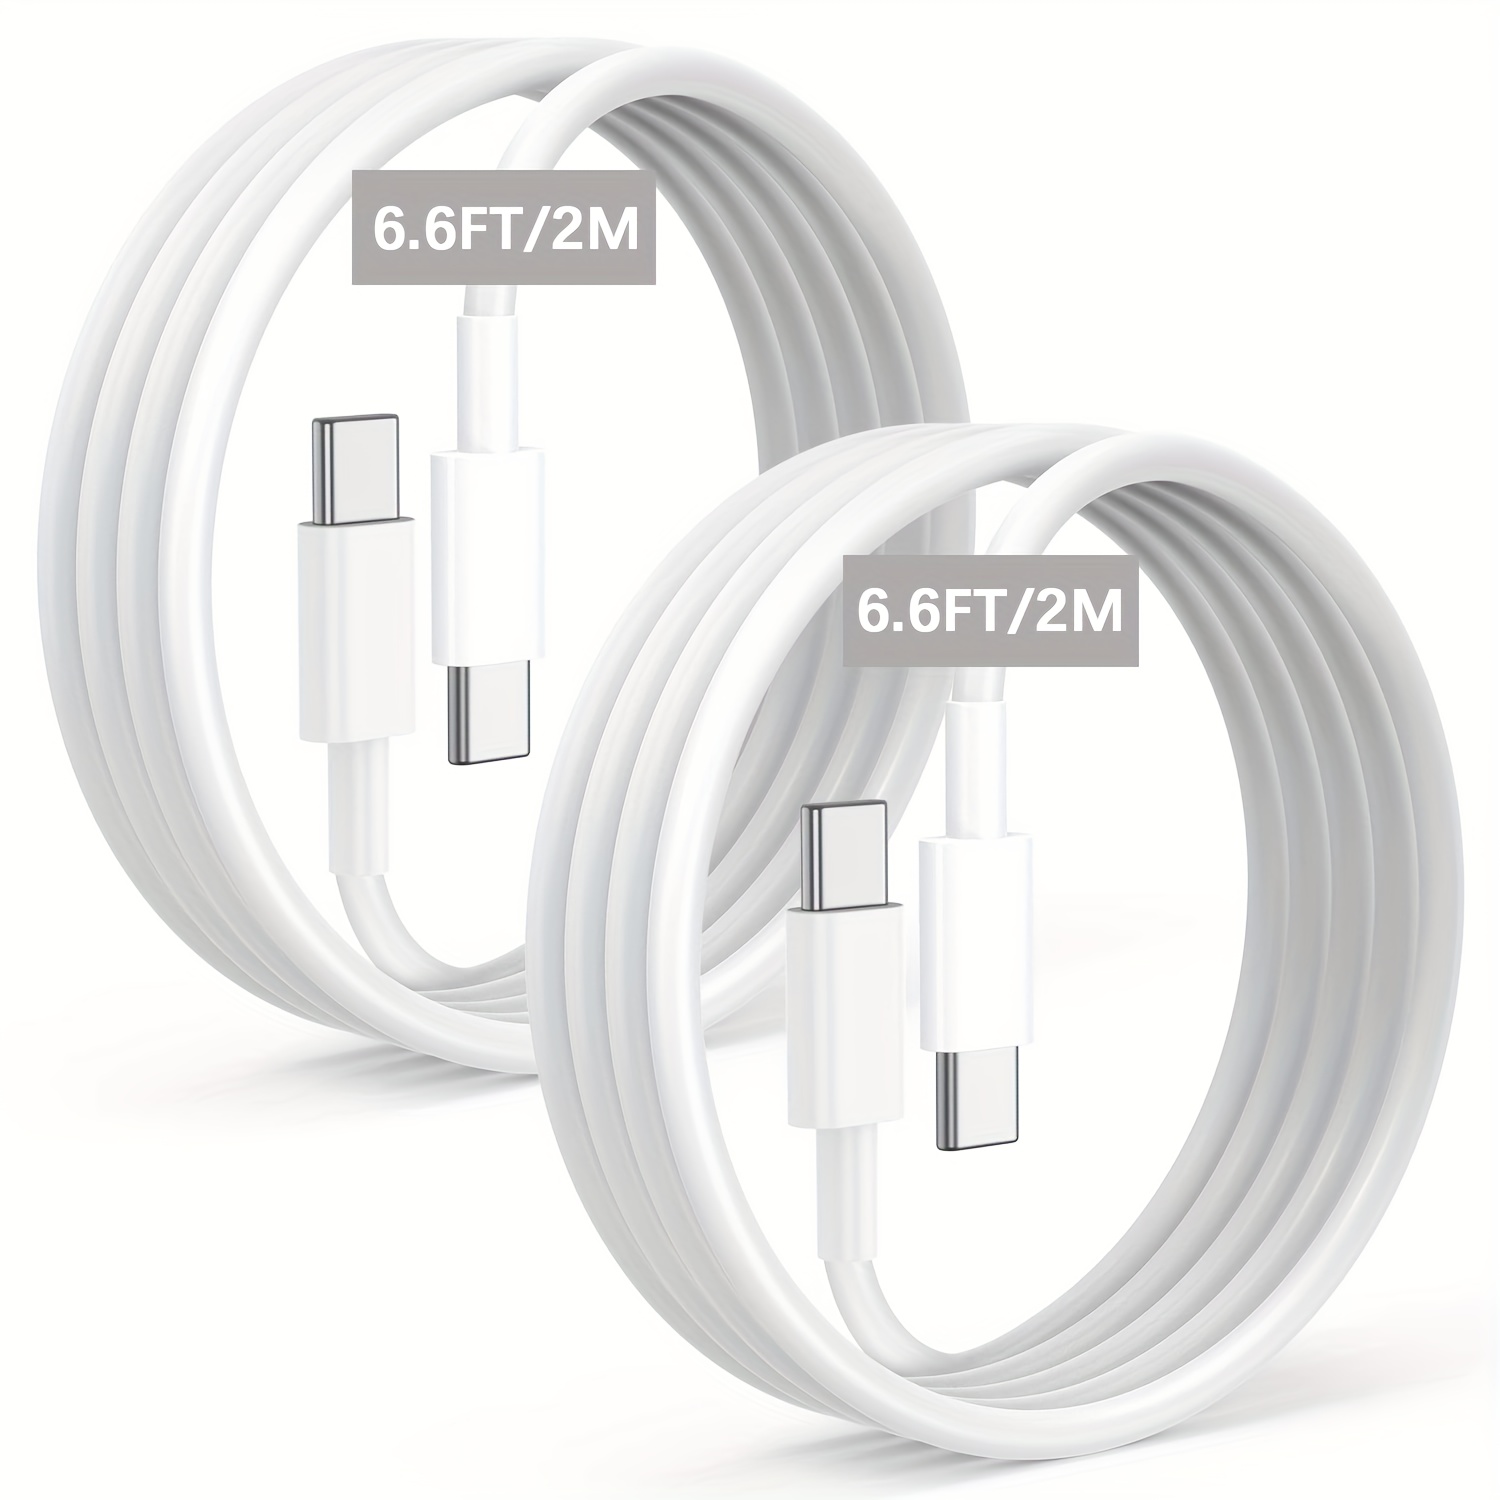 Câble USB C Original Apple Charge Rapide iPhone / Macbook / iPad Pro, 1m -  Blanc